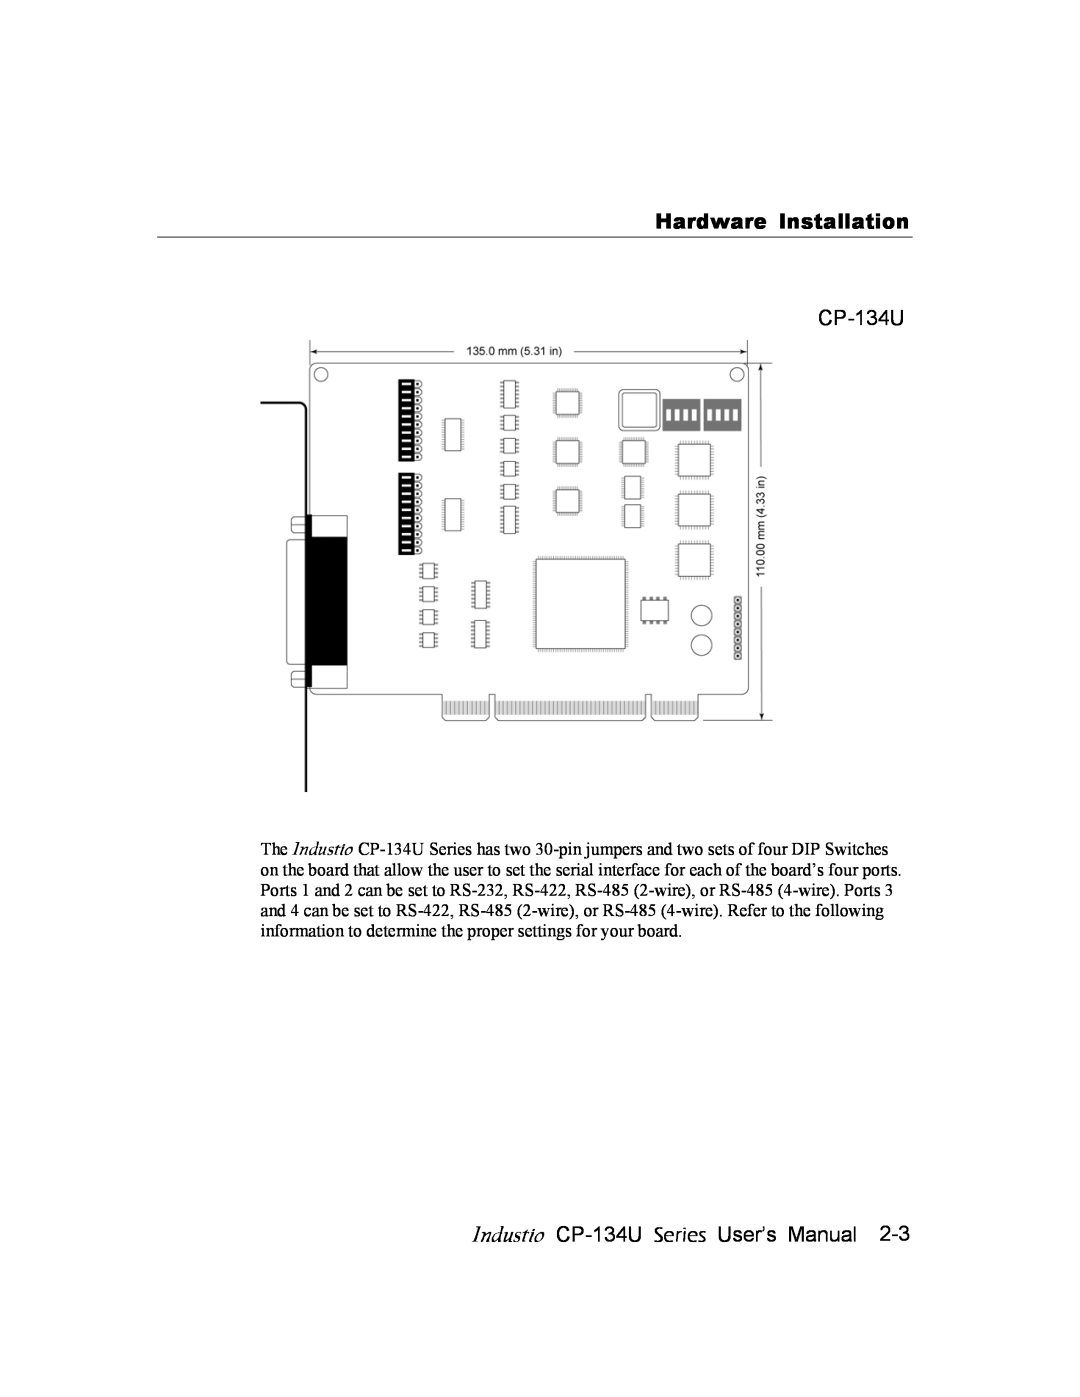 Moxa Technologies user manual Hardware Installation, Industio CP-134U Series User’s Manual 